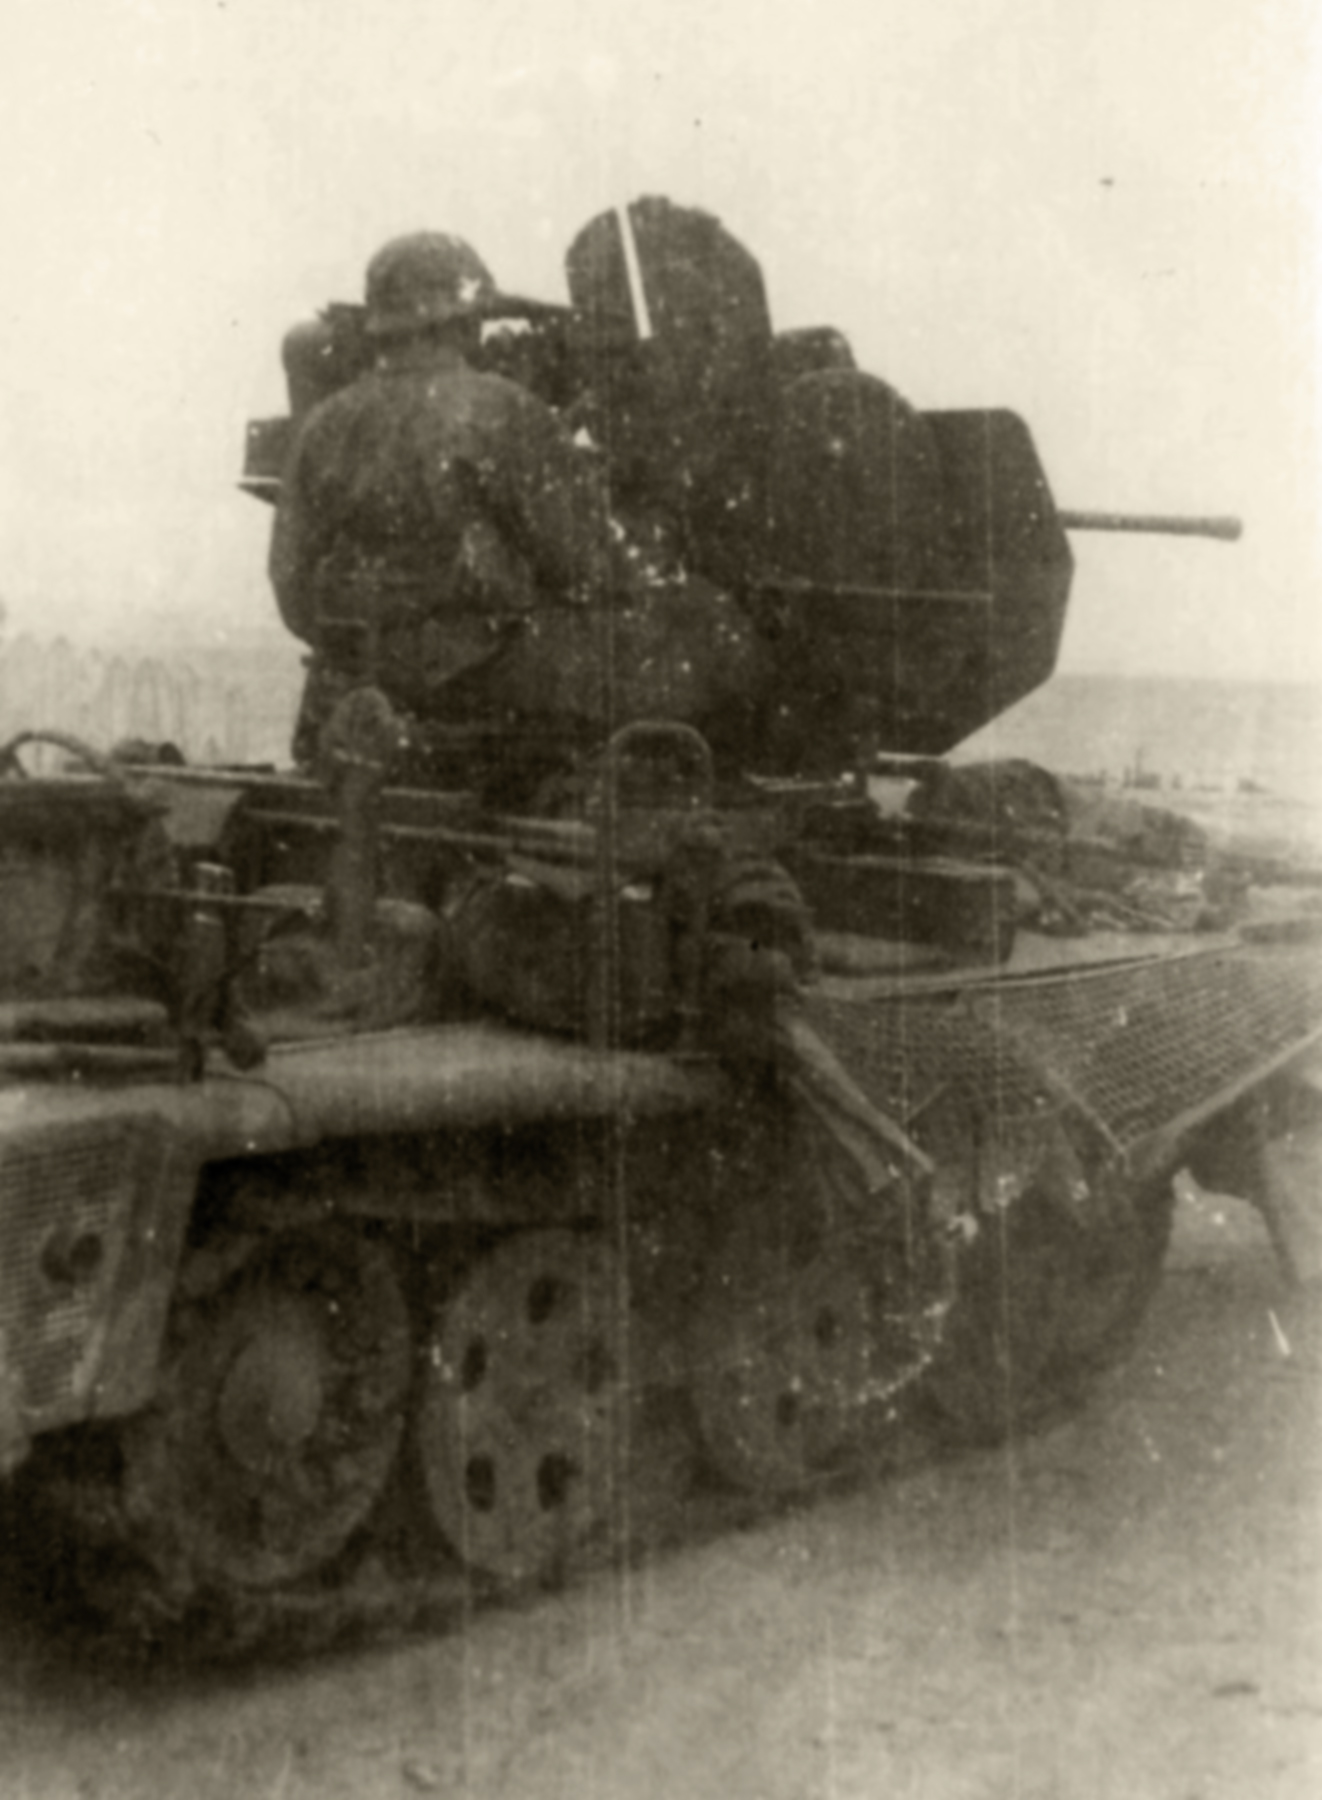 Fla Bataillon 22 (mot) with 2cm Flak 38 SdKfz 11 during siege of Sevastopol 1941 ebay 01